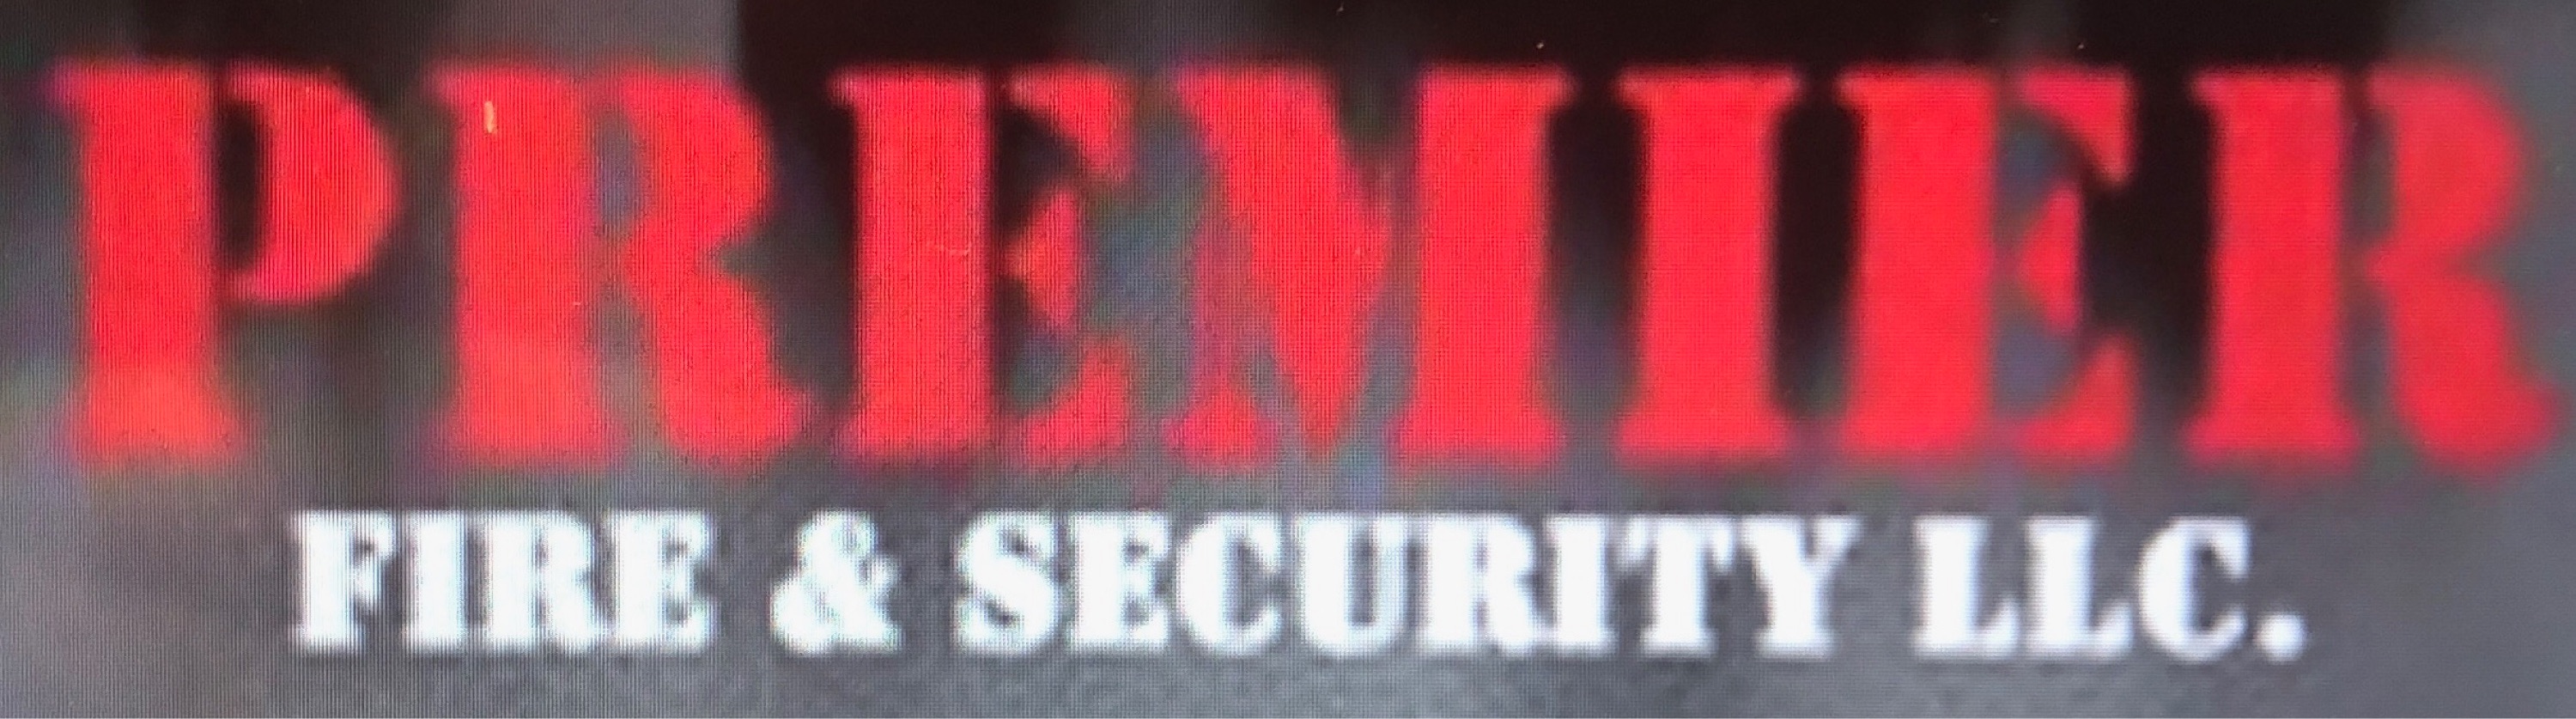 Premier Fire & Security, LLC Logo